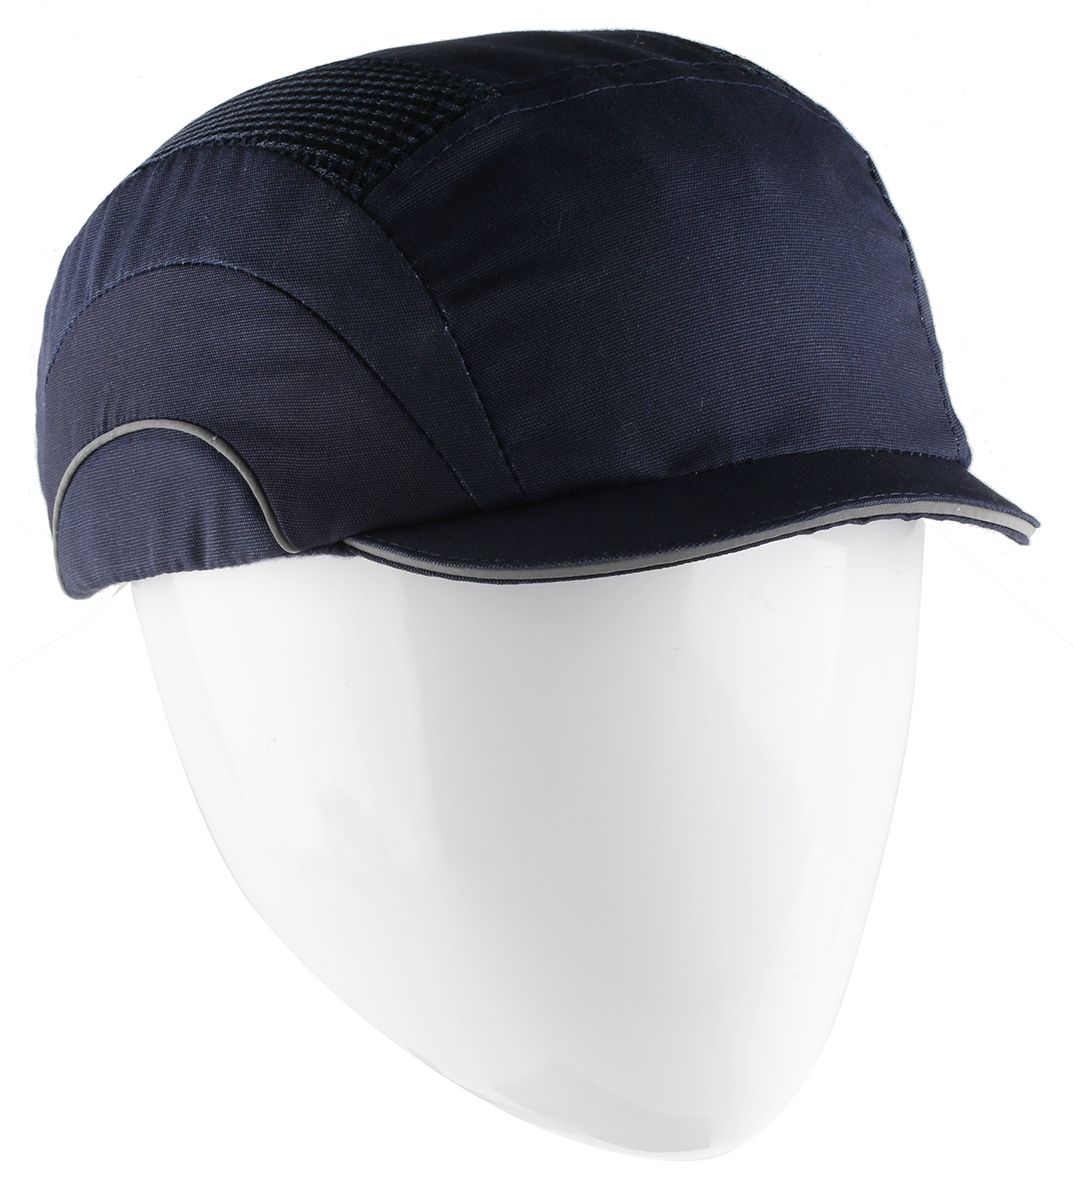 JSP Navy Micro Safety Cap, HDPE Protective Material